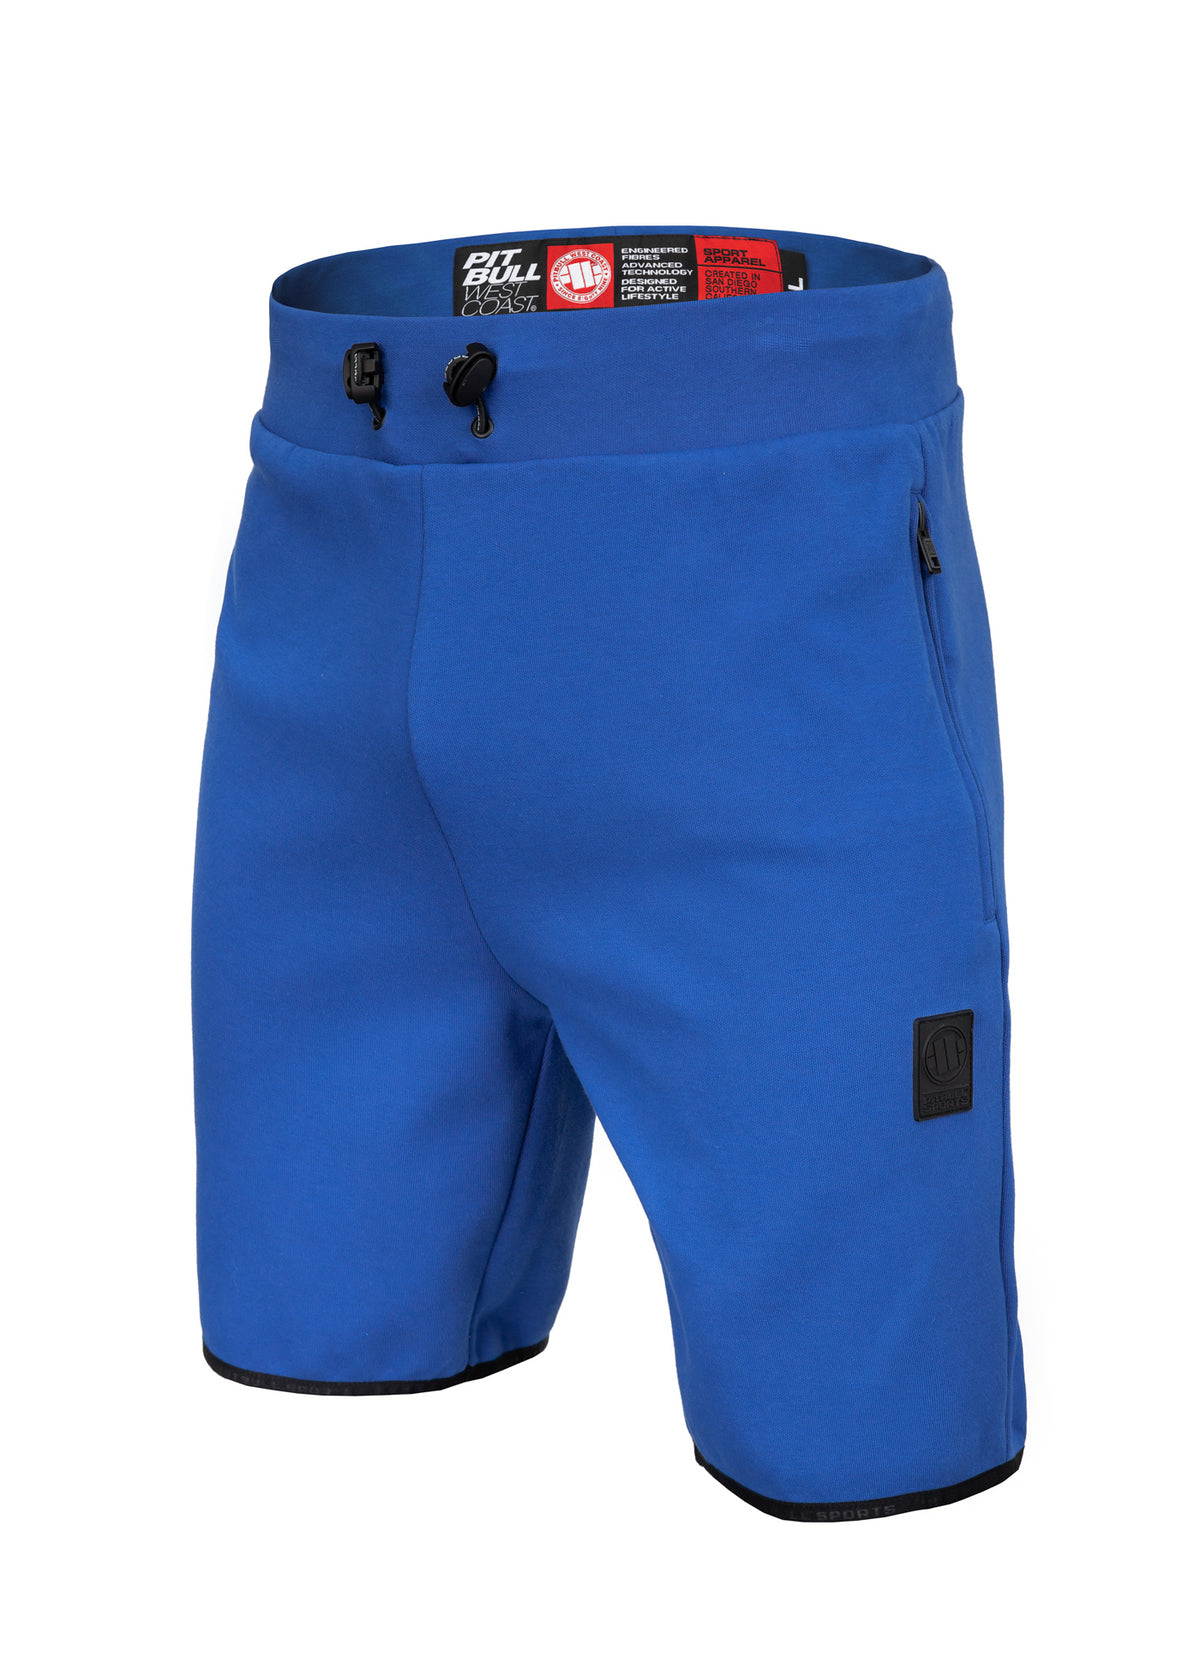 CLANTON Royal Blue Shorts.